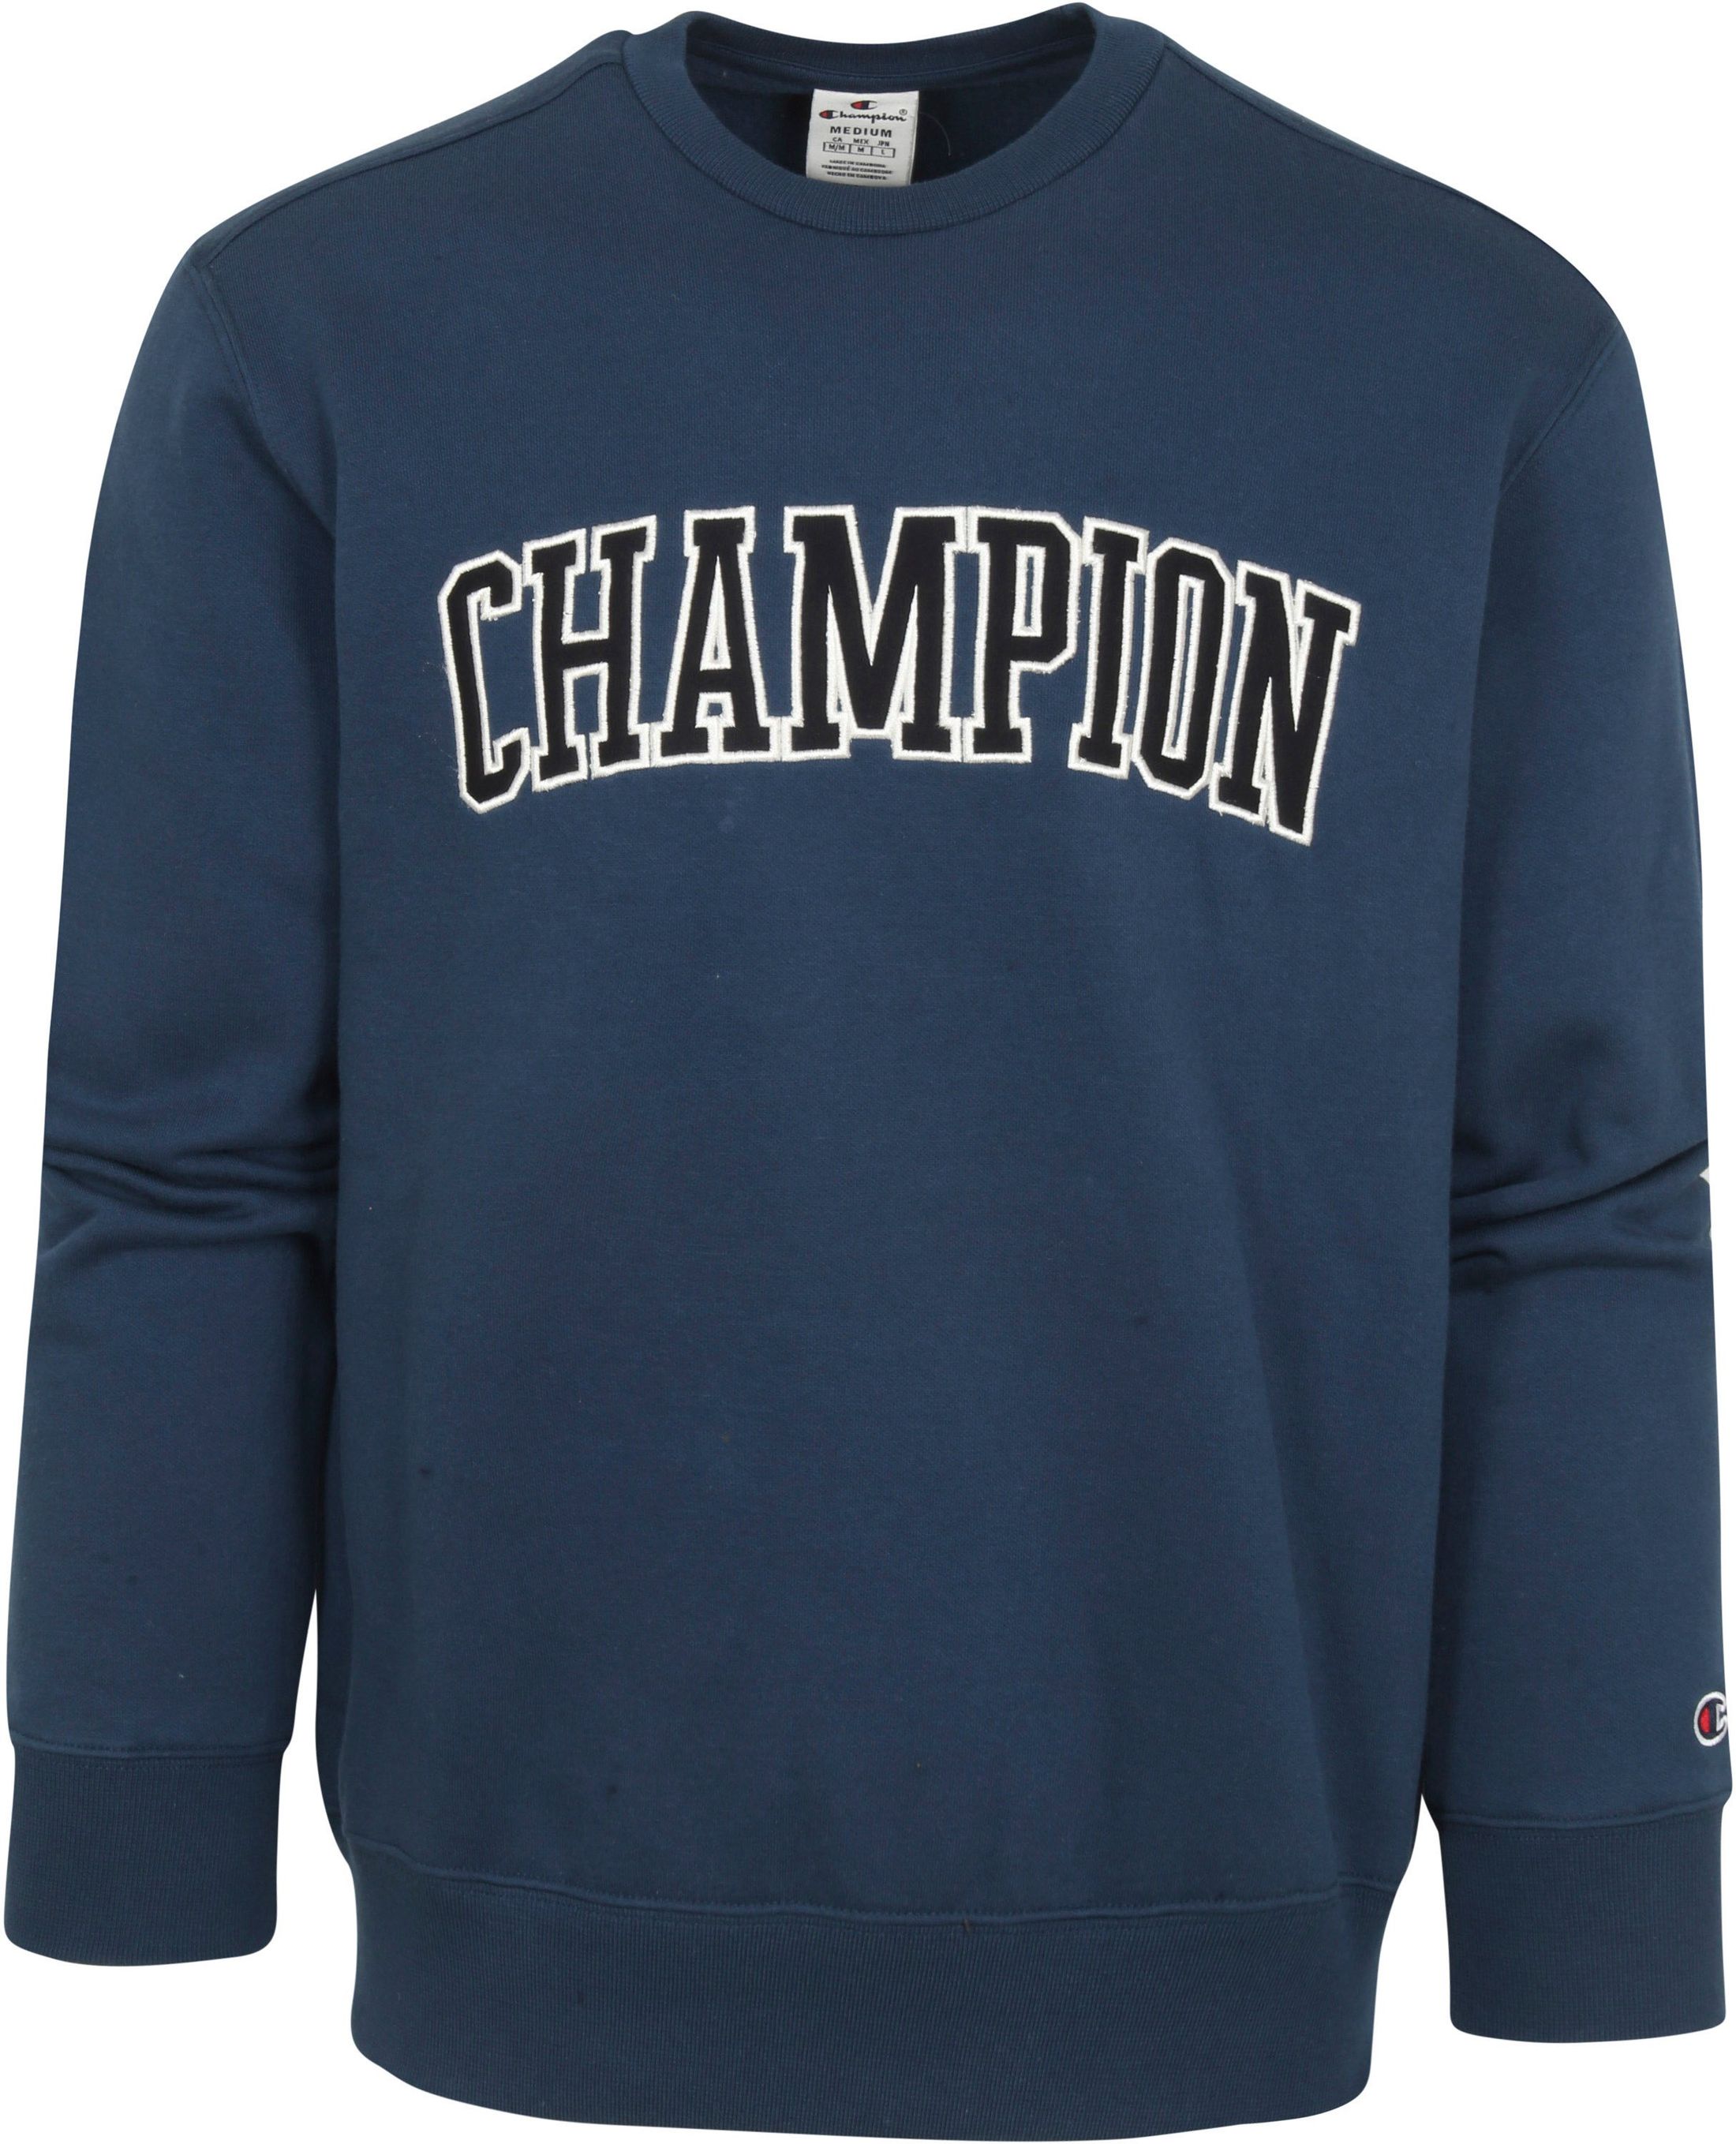 Champion Sweater Logo Navy Dark Blue Blue size L